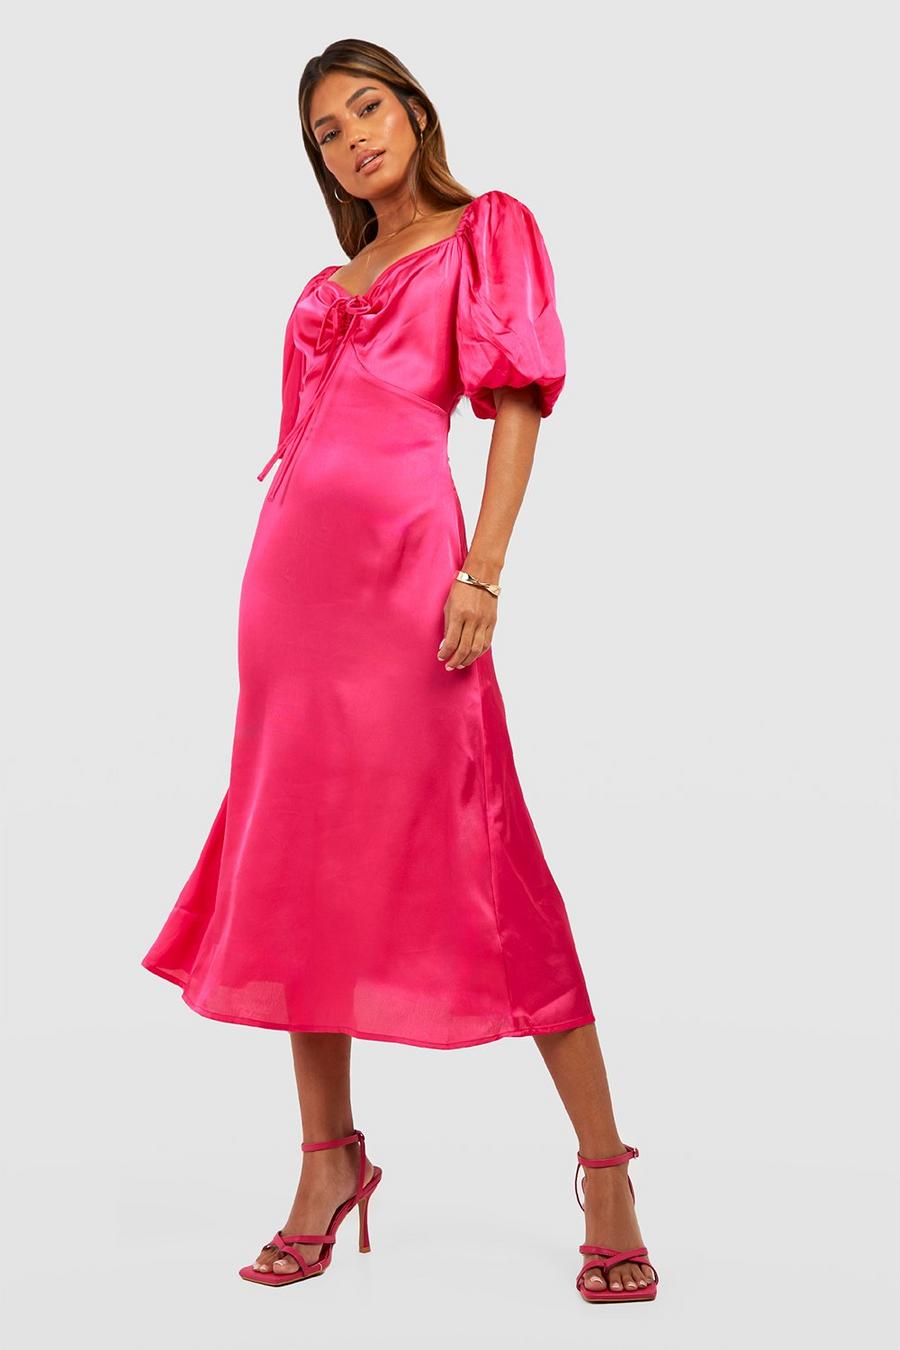 Hot pink rose Satin Ruched Puff Sleeve Midi Dress